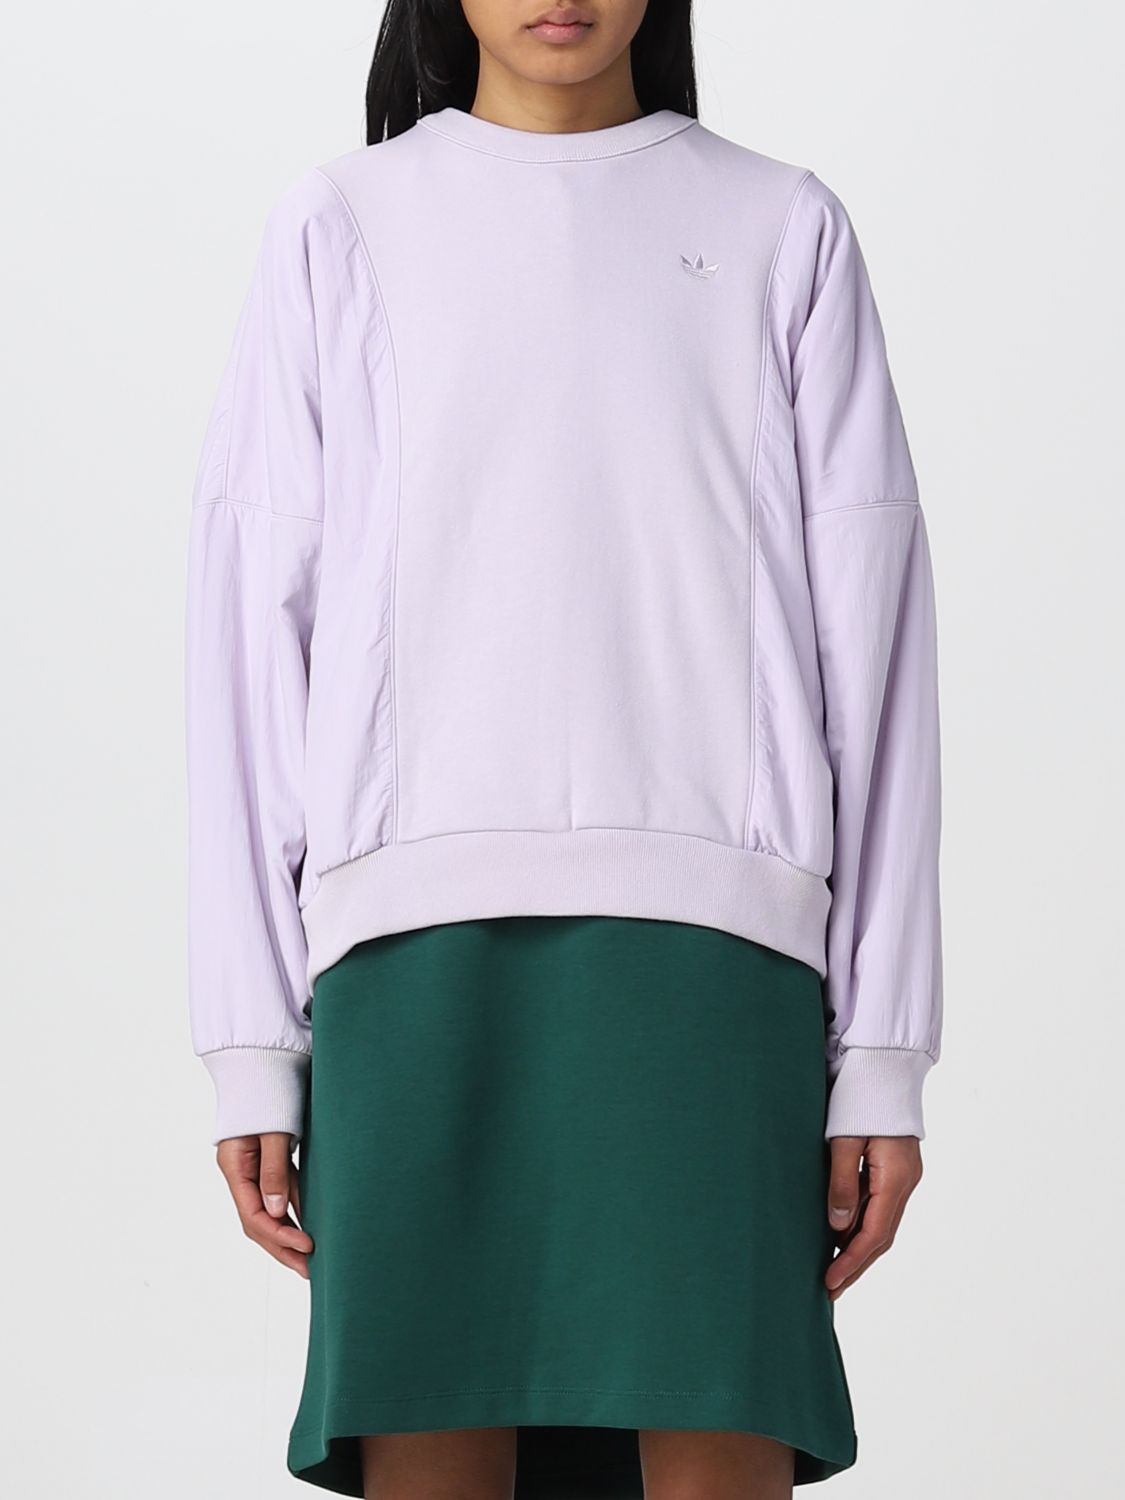 Sweatshirt Adidas Originals: Adidas Originals Damen Sweatshirt violett 1